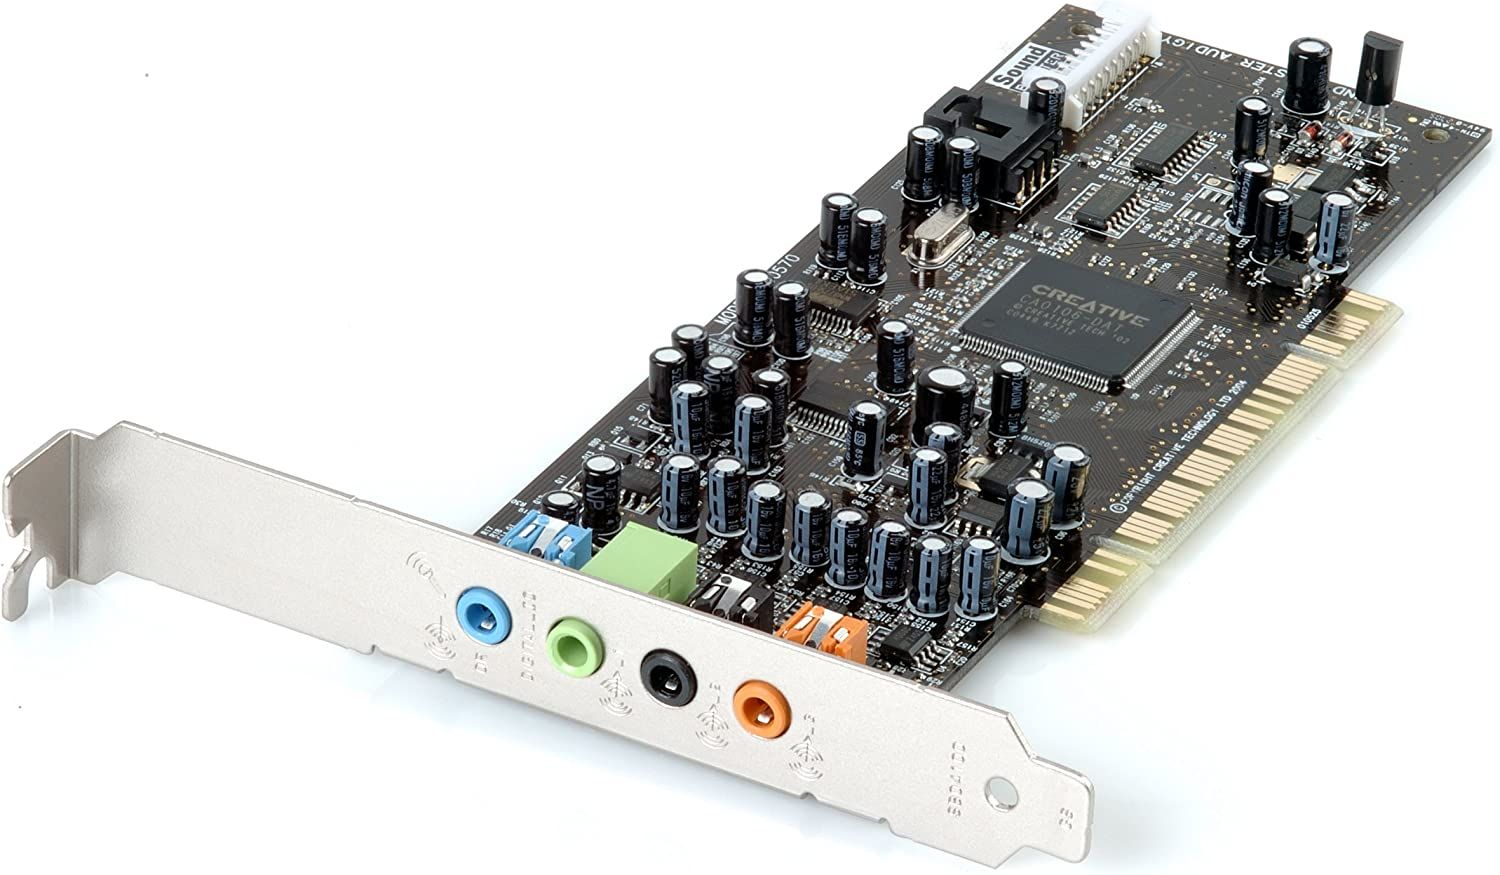 Geluidskaart Creative Labs Sound Blaster Audigy SE PCI 7.1 Surround SB0570